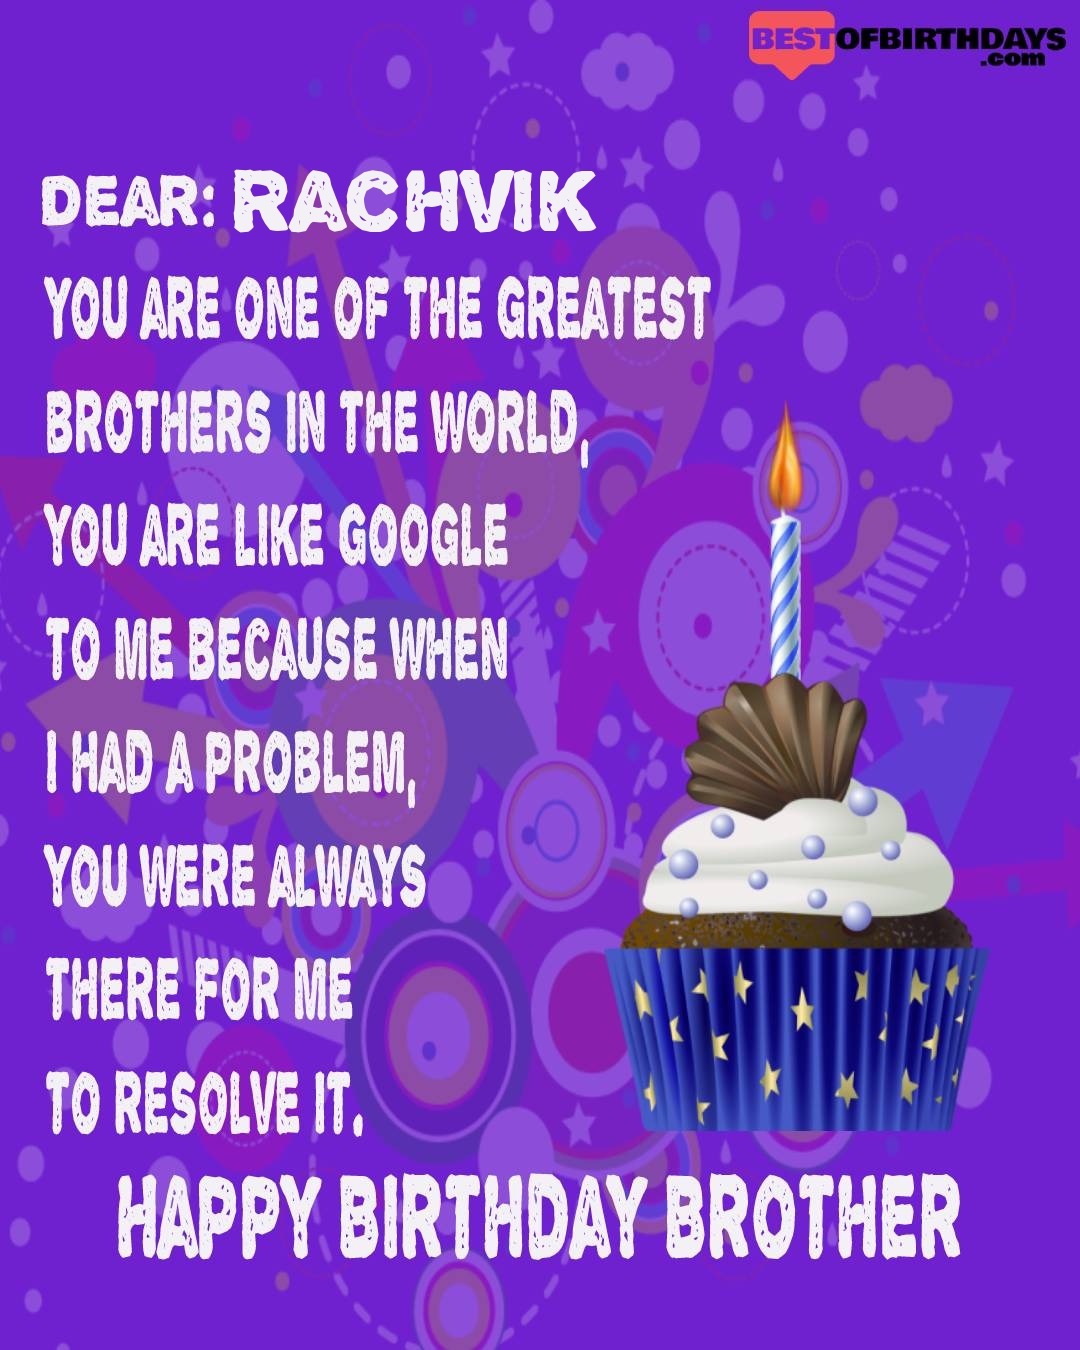 Happy birthday rachvik bhai brother bro